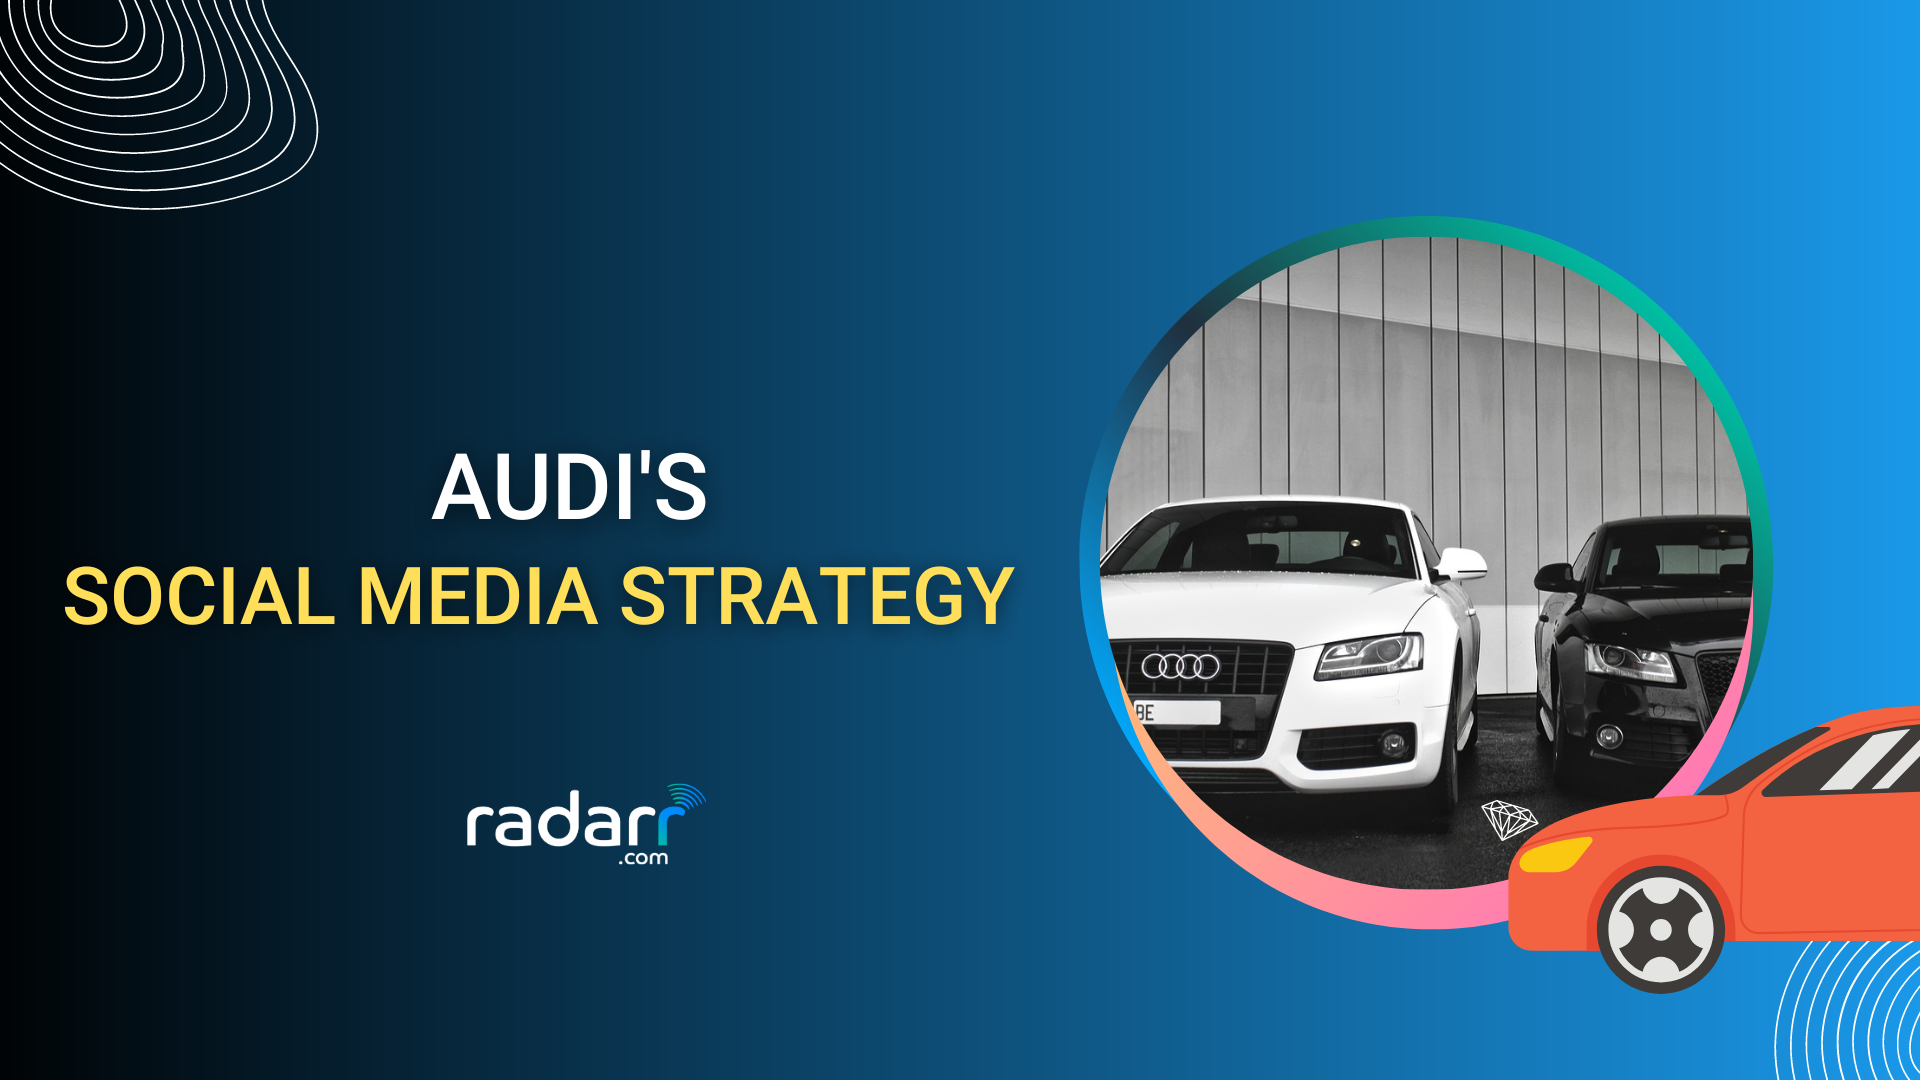 audi's social media strategy for marketing